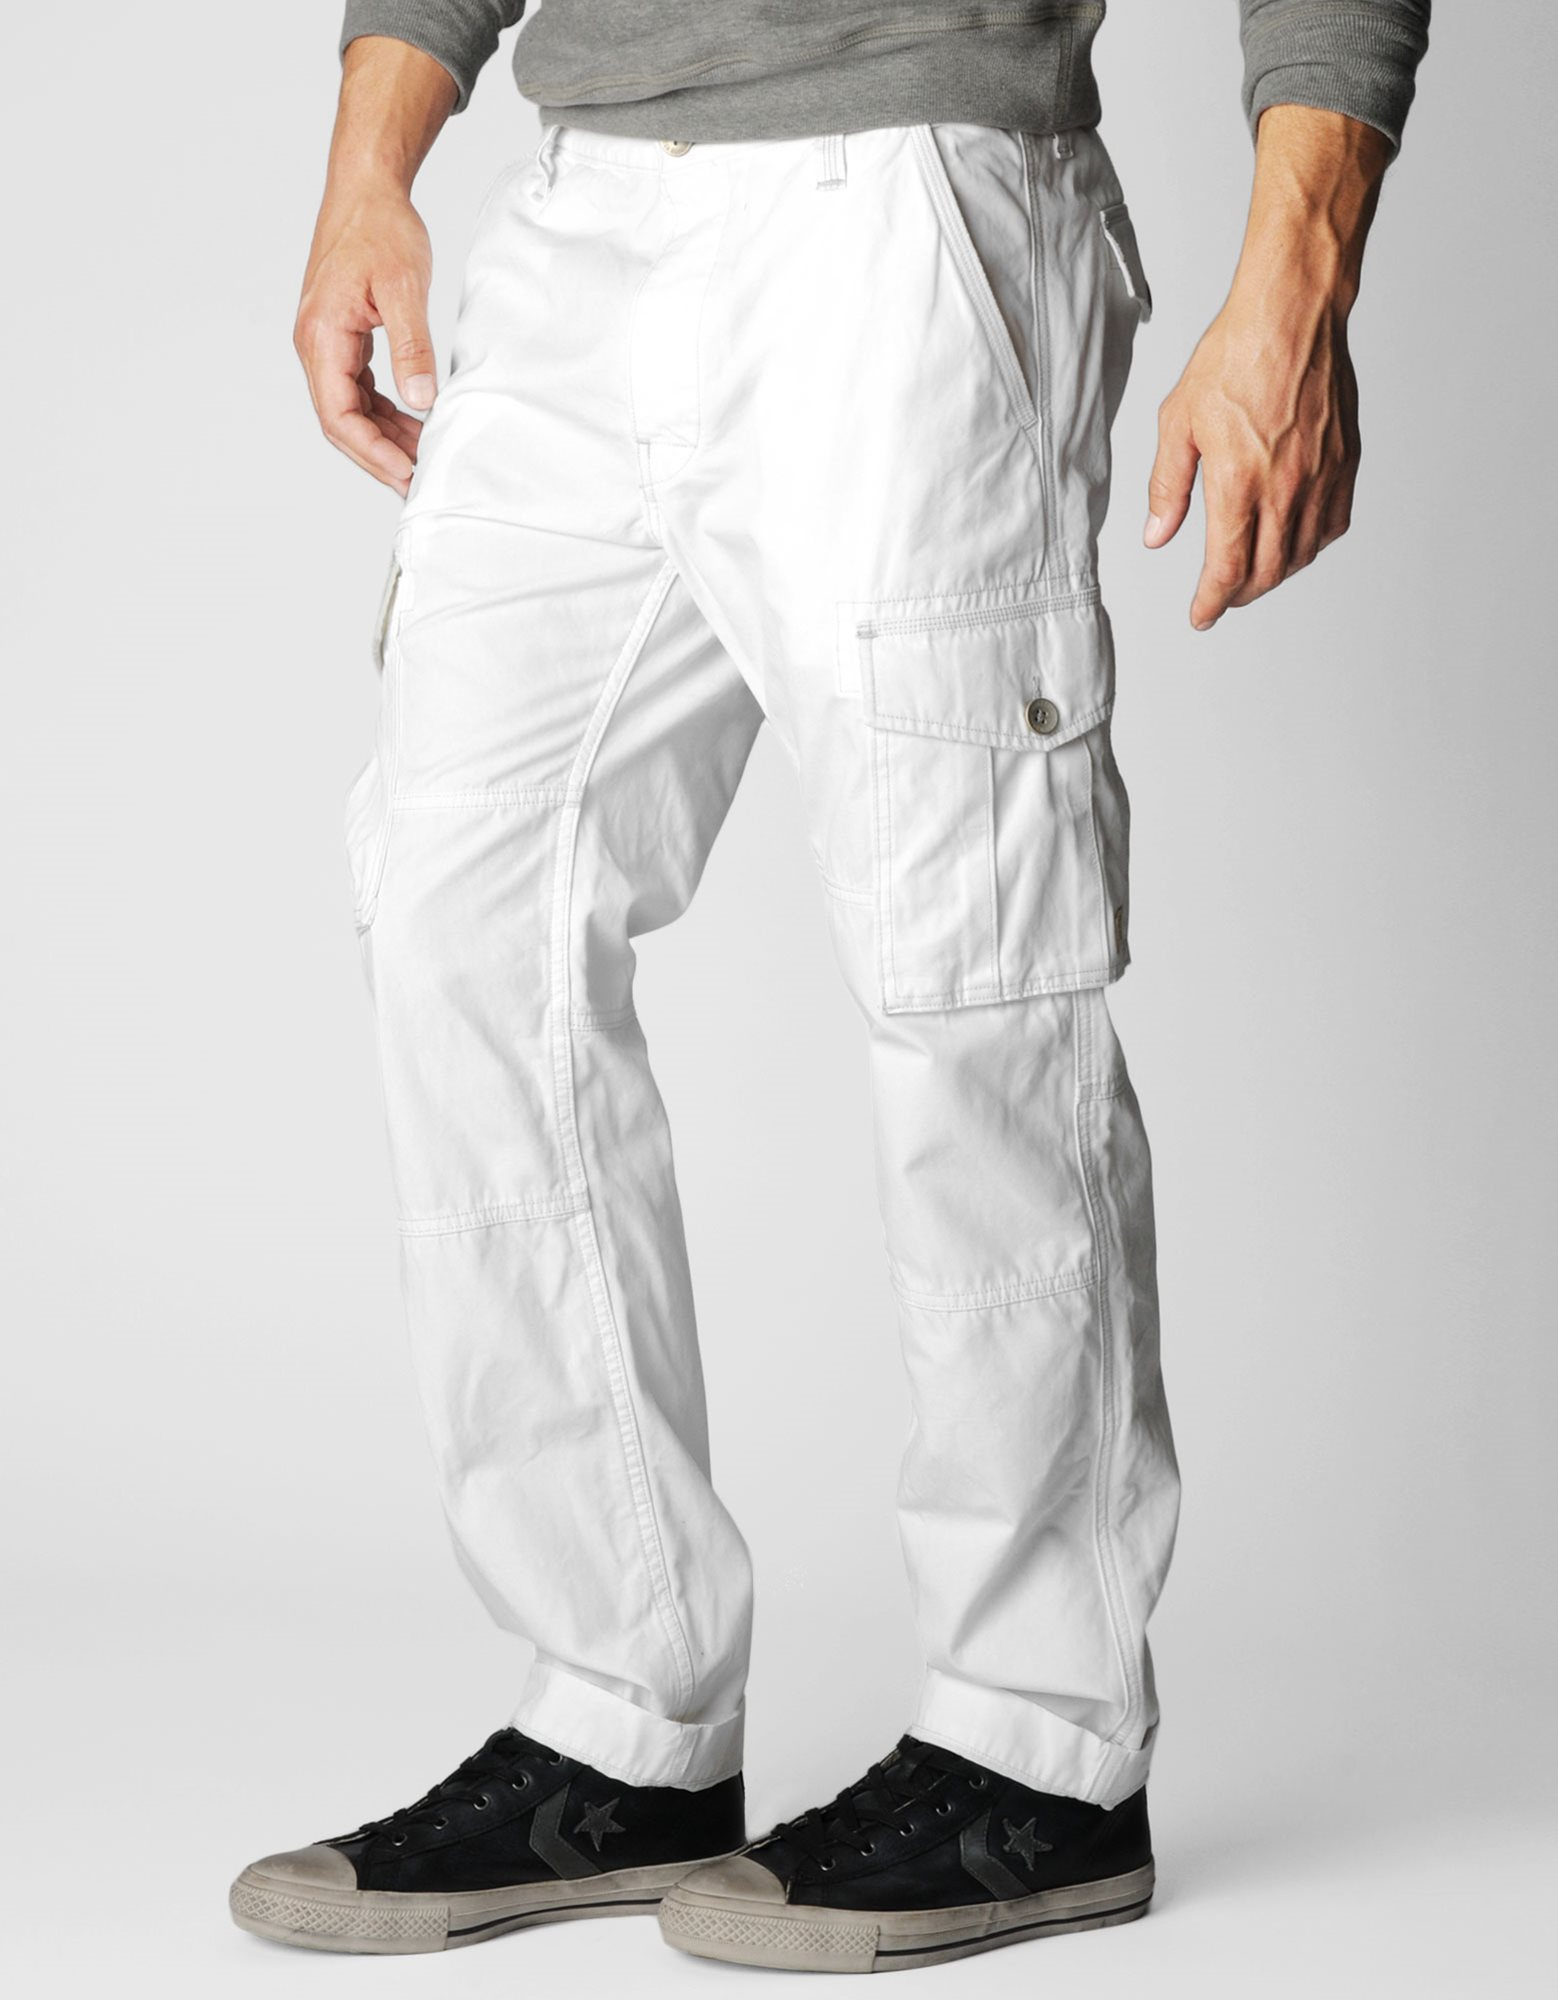 Buy Men's White Cargo Track Pants Online at Bewakoof